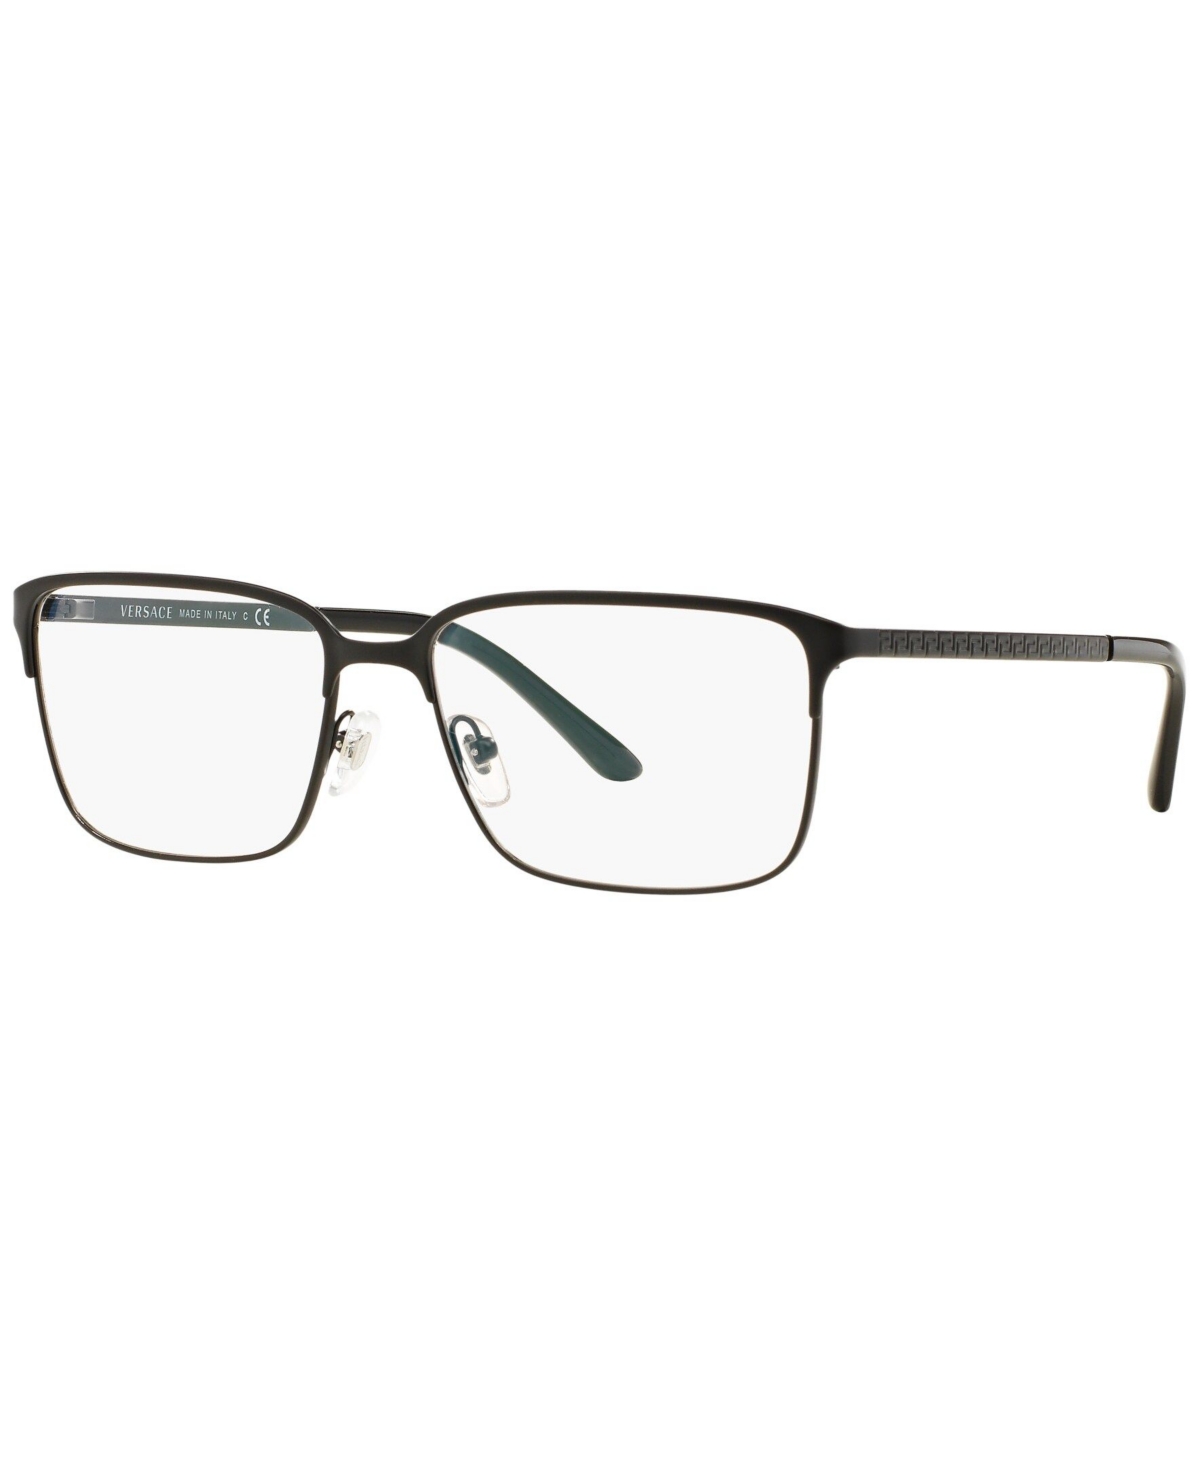 VE1232 Men's Rectangle Eyeglasses - Matte Blac